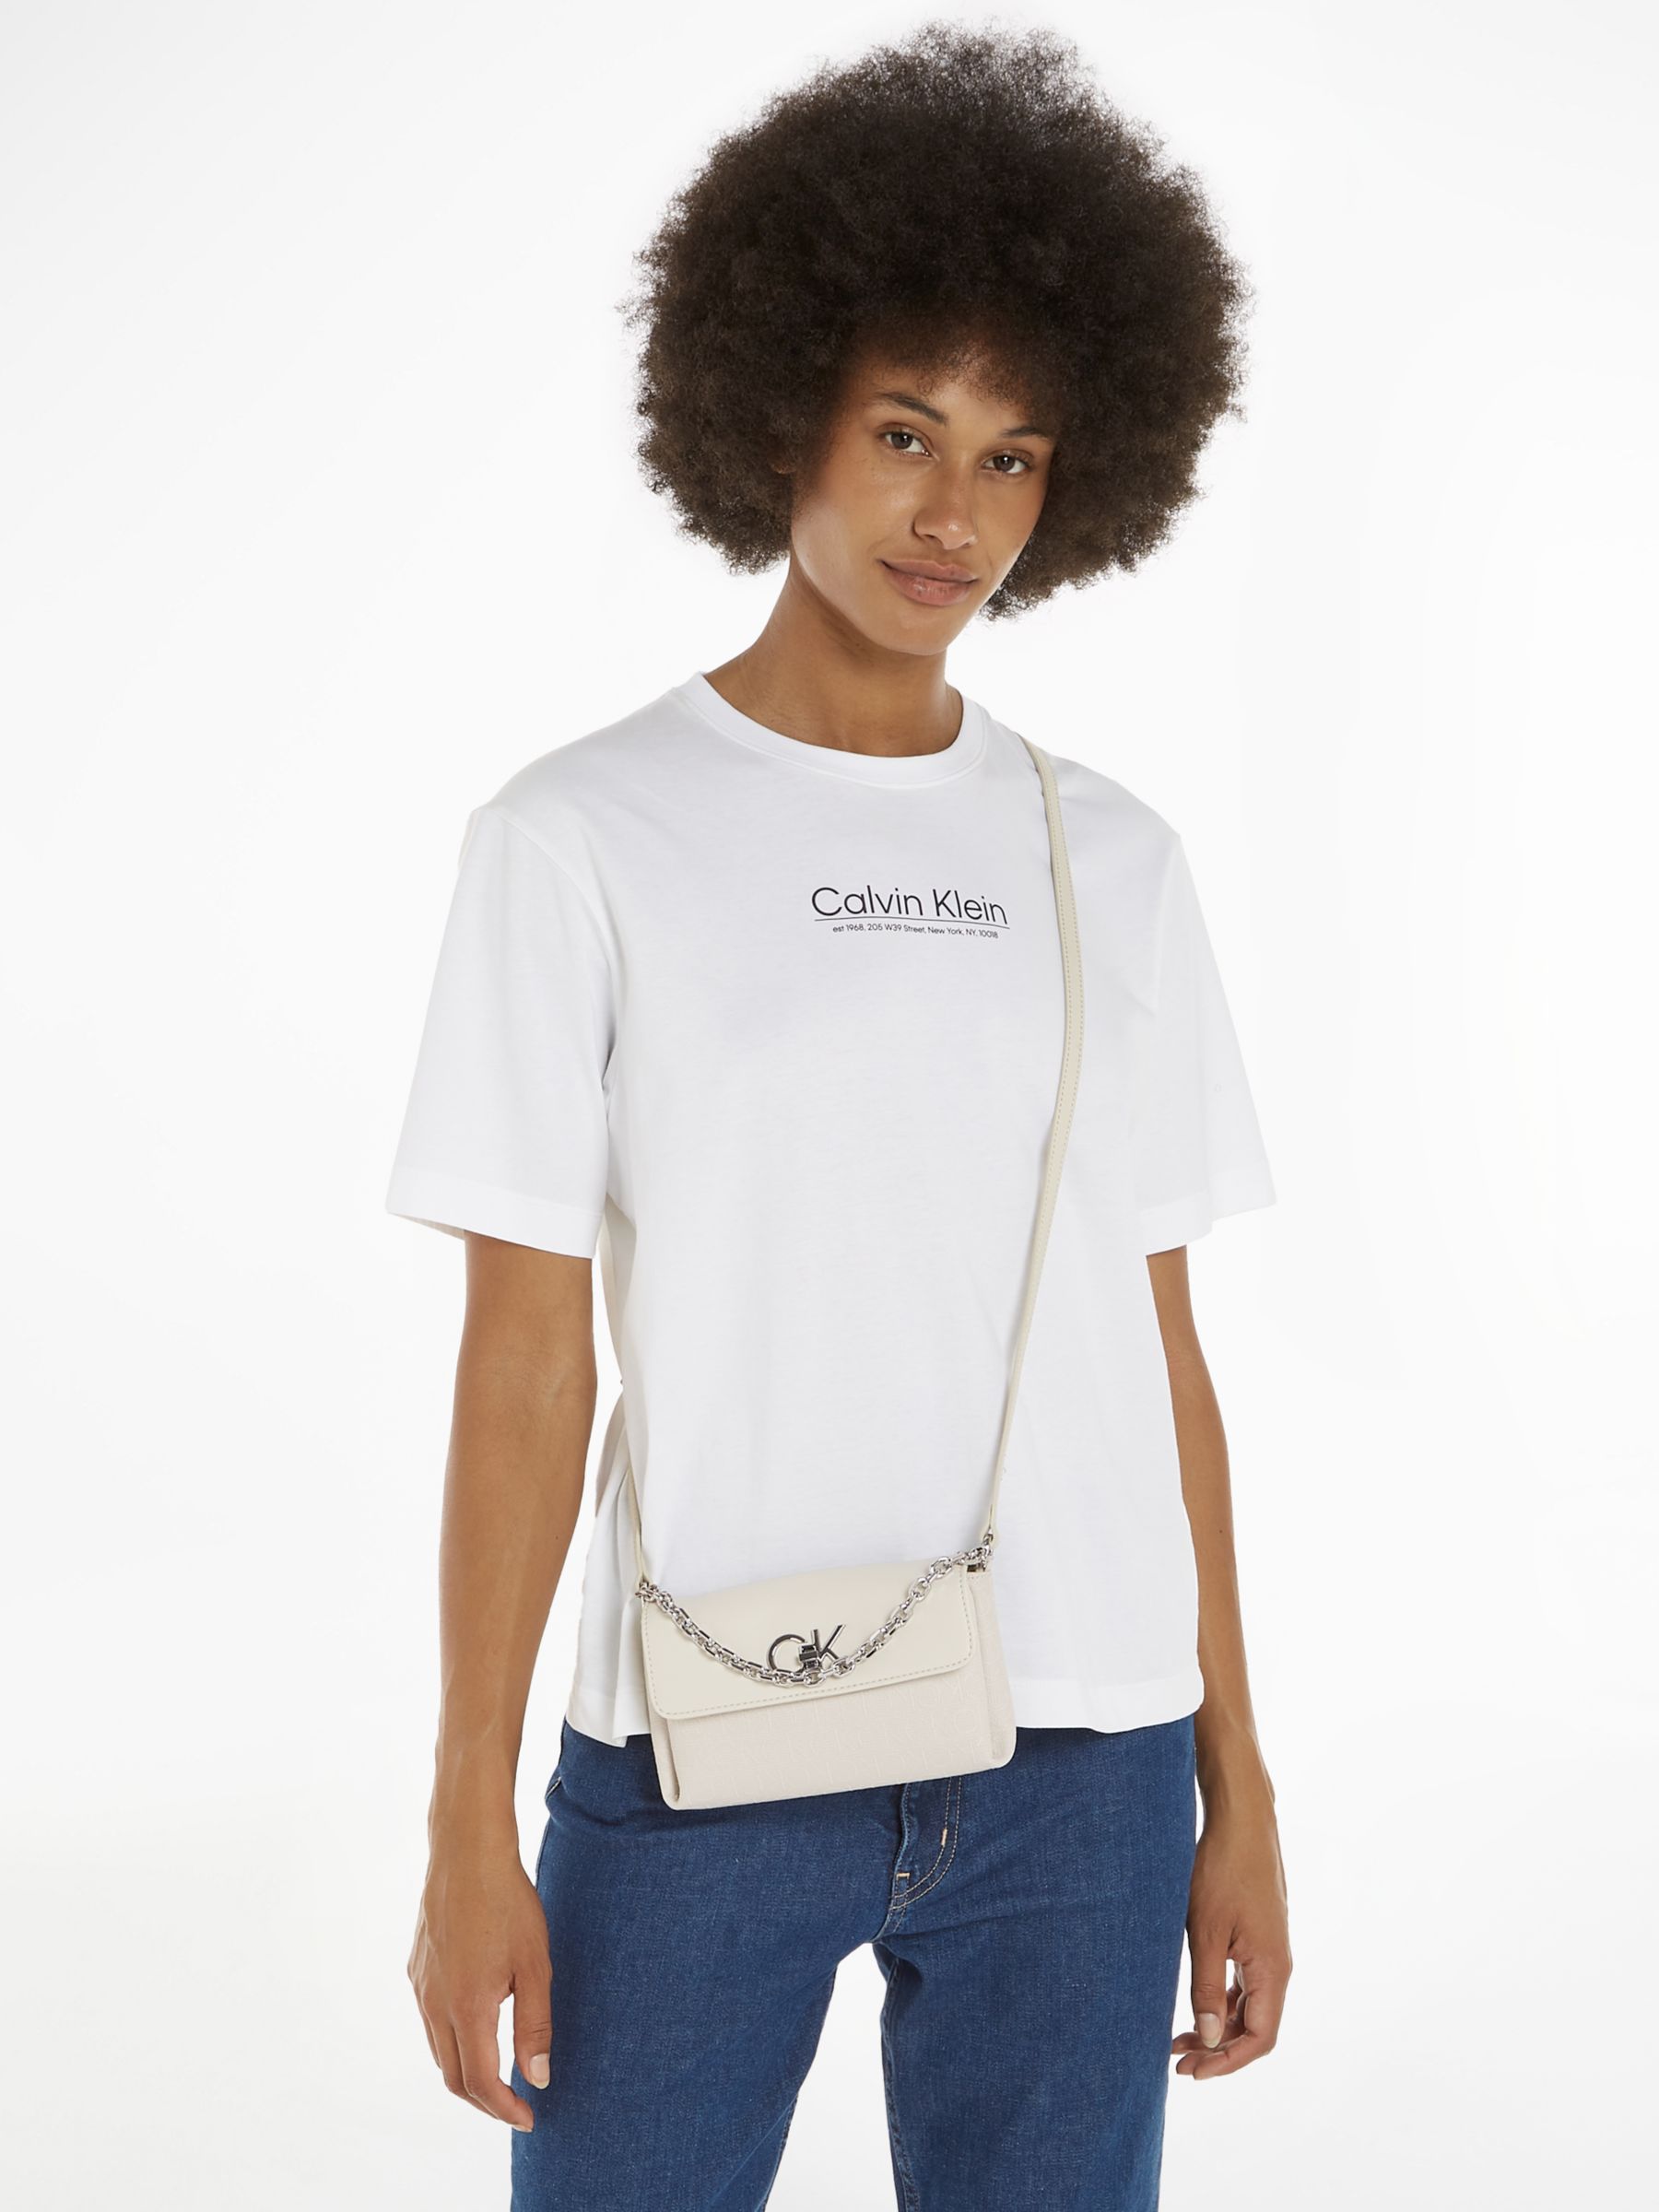 Calvin Klein Mini Jacquard Weave Crossbody Bag, Ecru, One Size